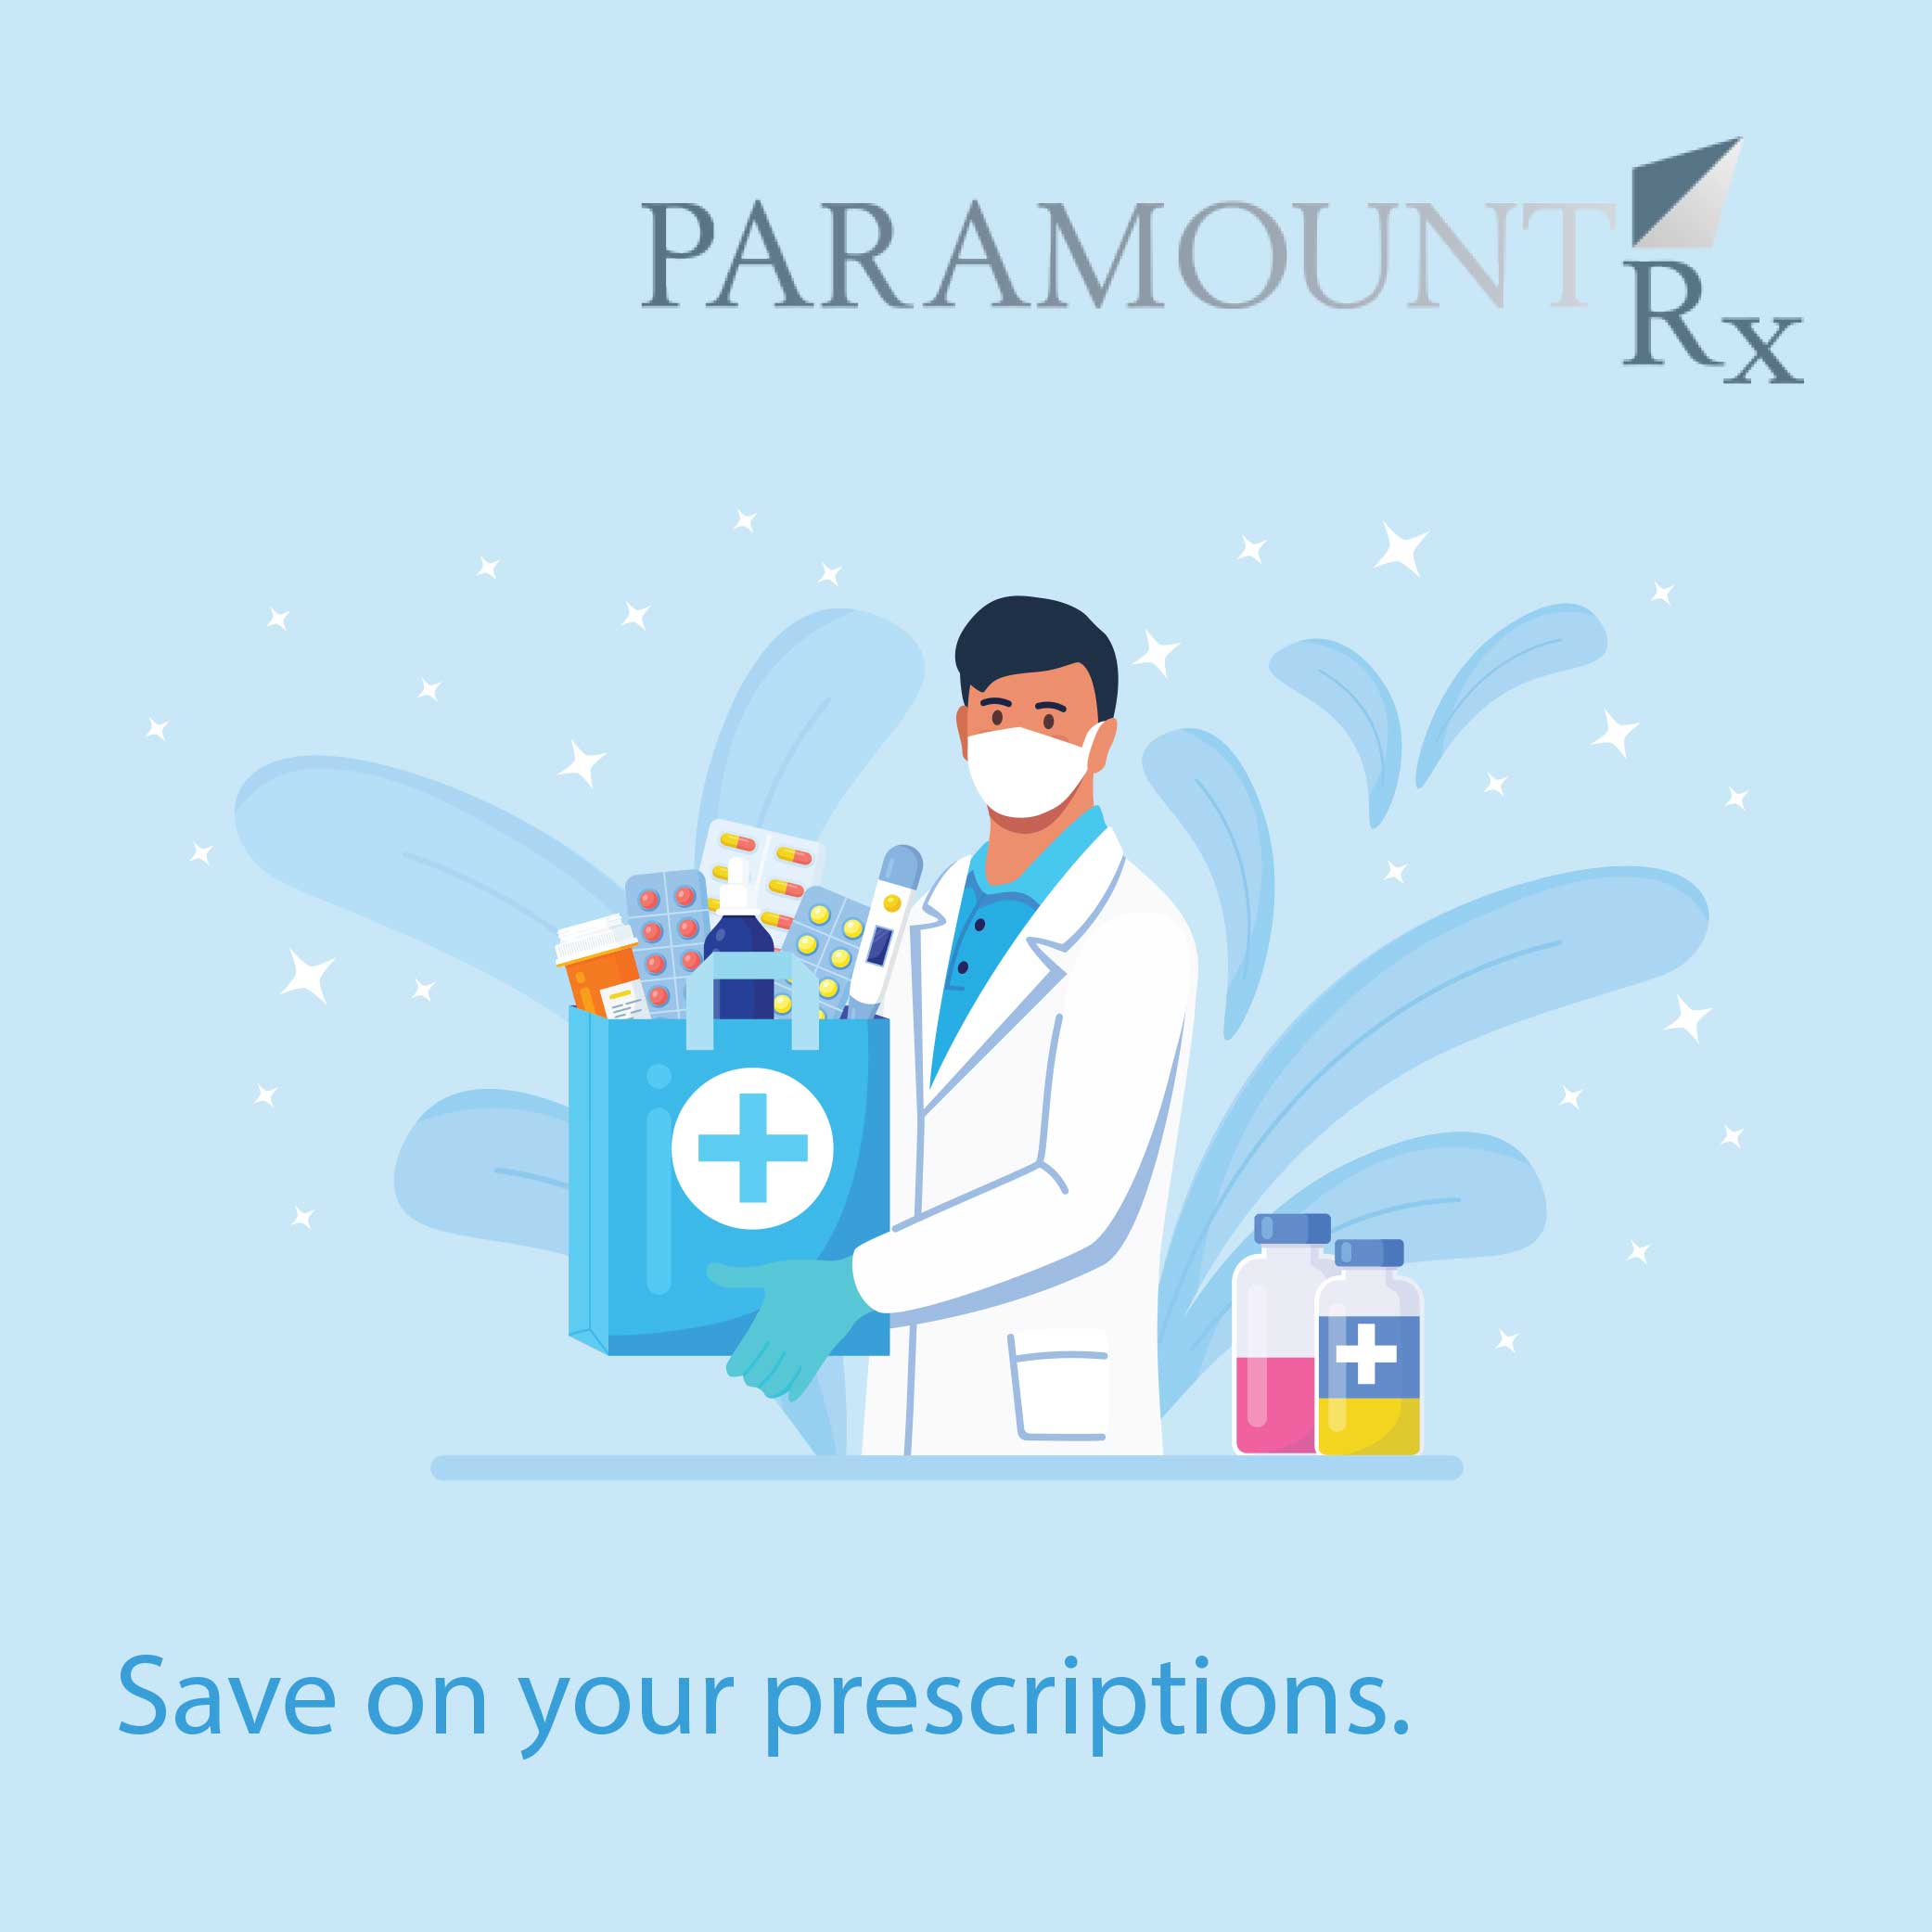 Paramount RX Prescription Discounts, a Benefit Boost Subscription Product